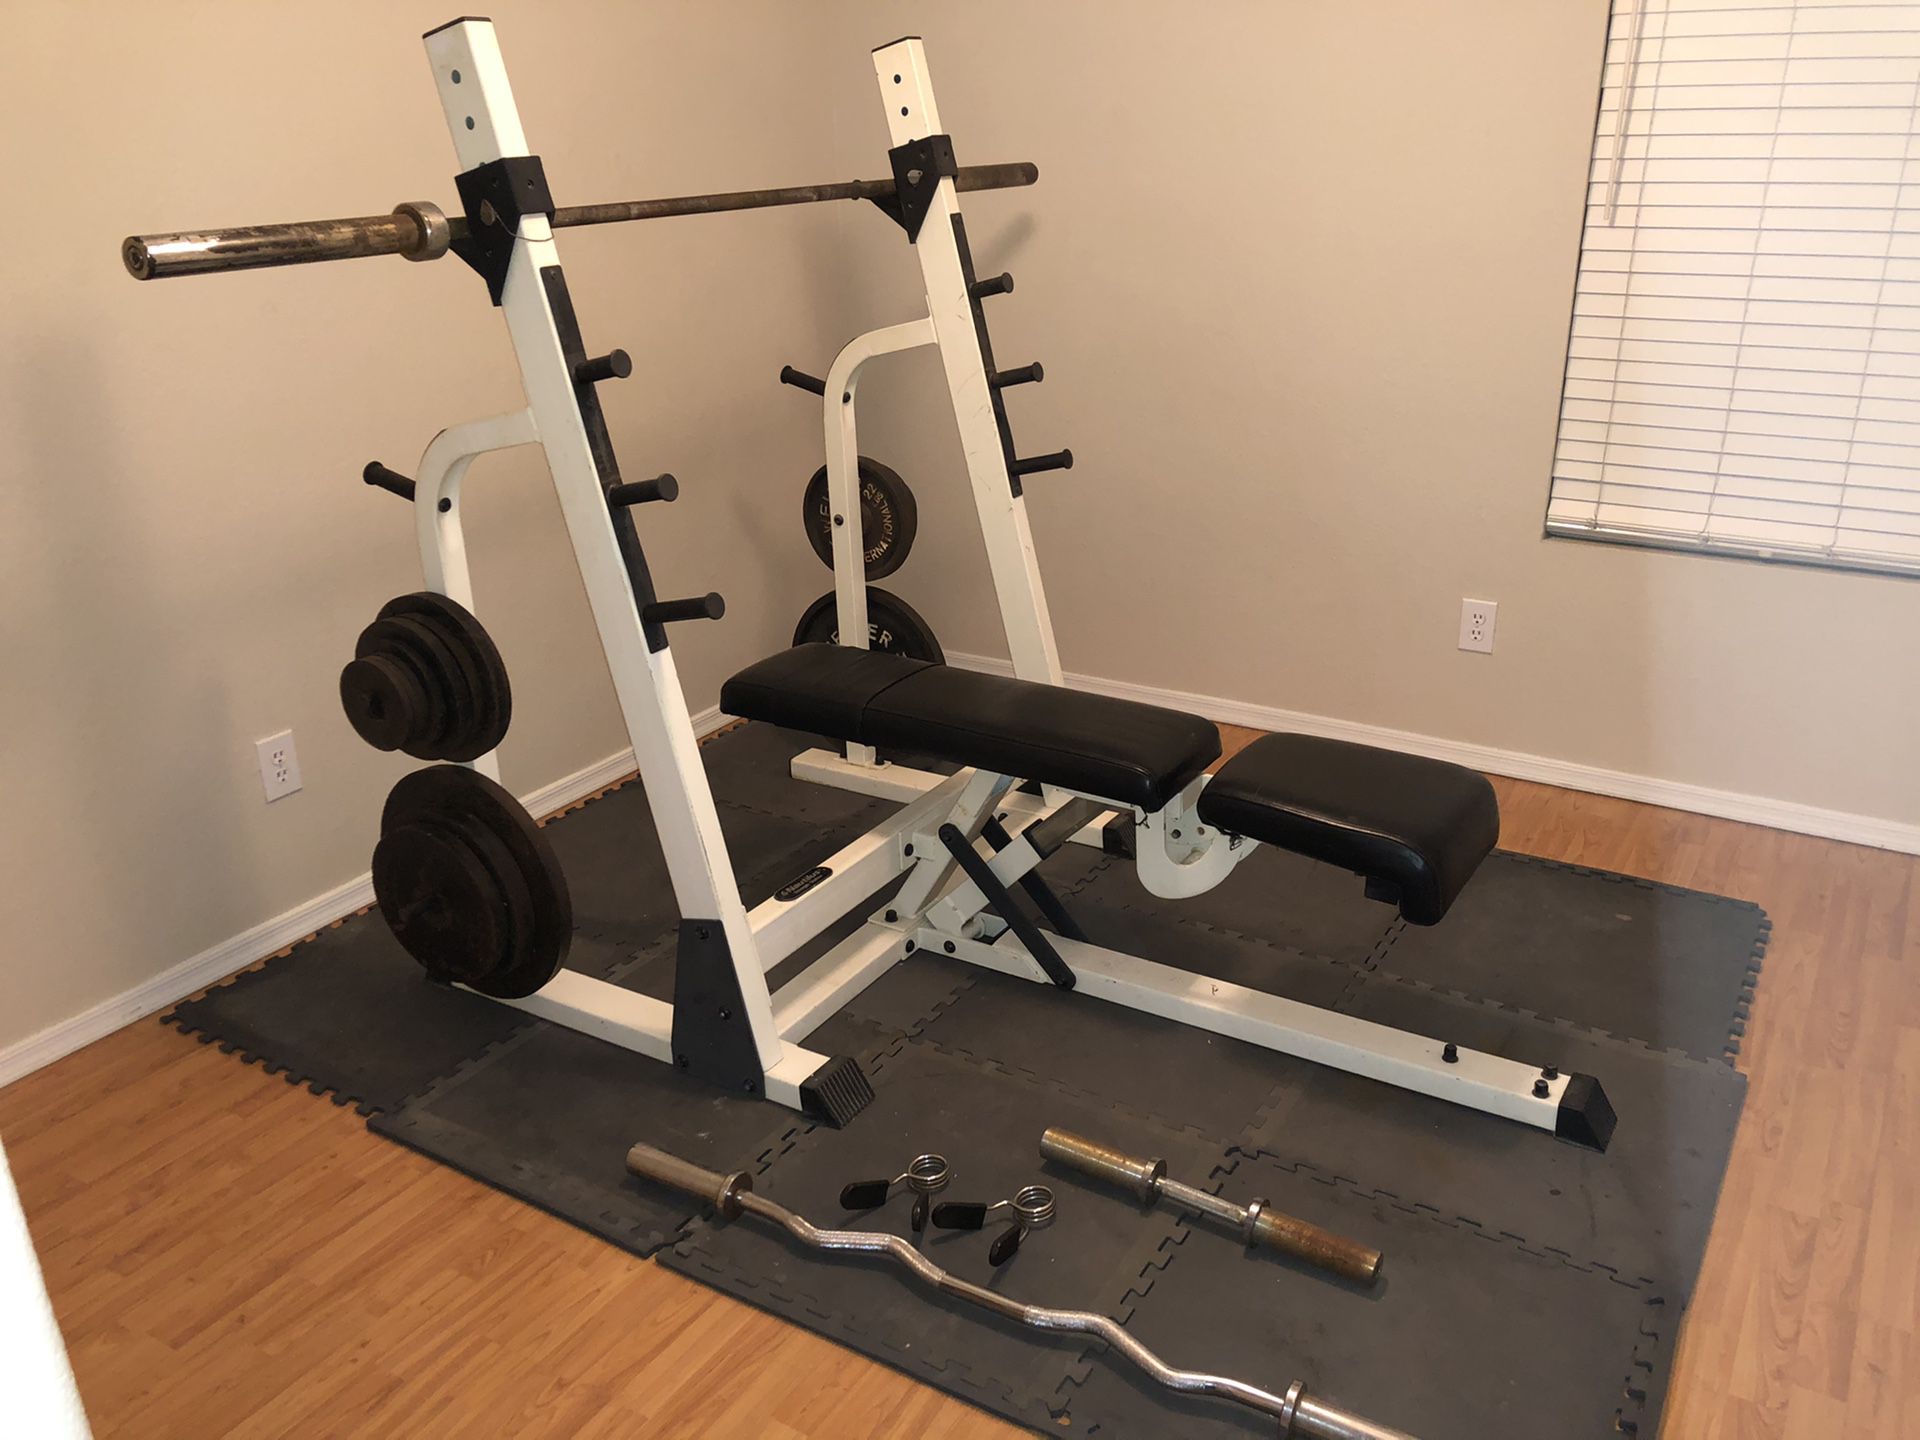 Weight bench / squat rack 325 lb plates